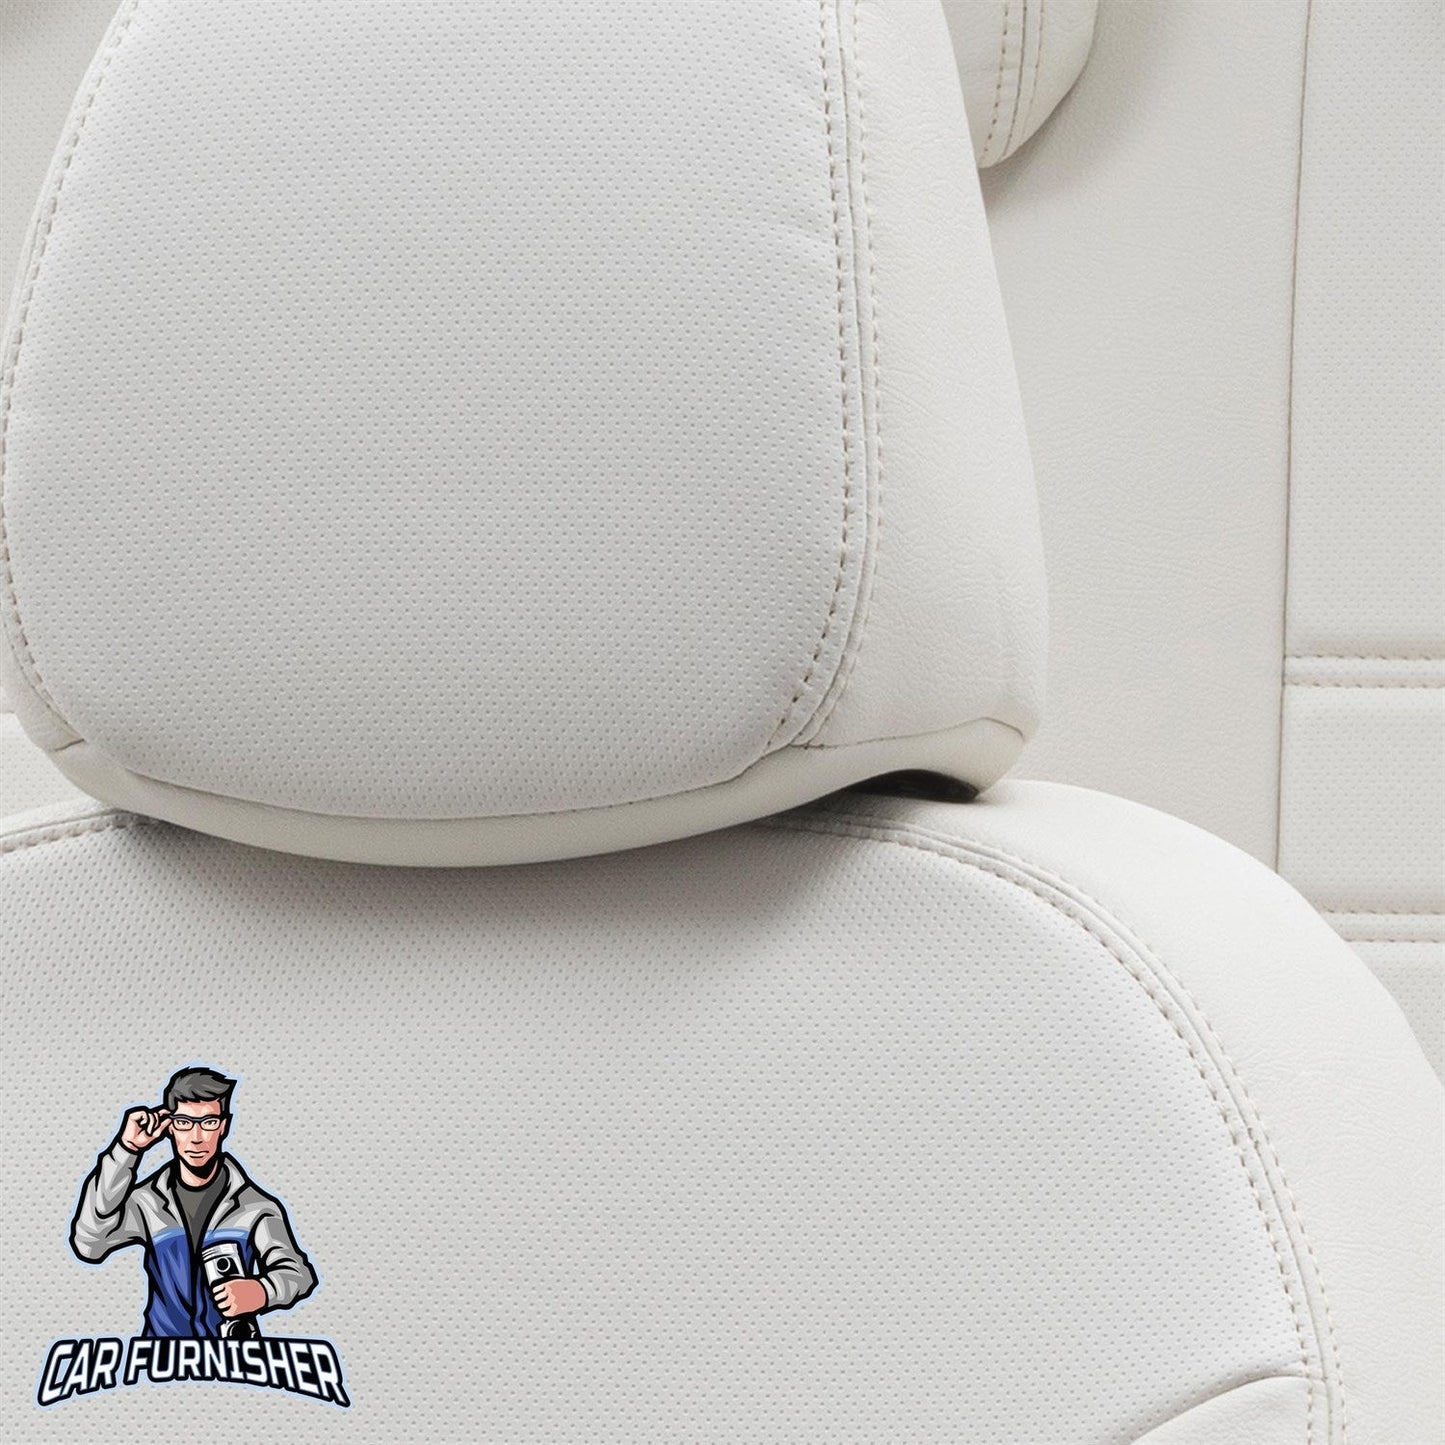 Hyundai Tucson Seat Covers Istanbul Leather Design Ivory Leather